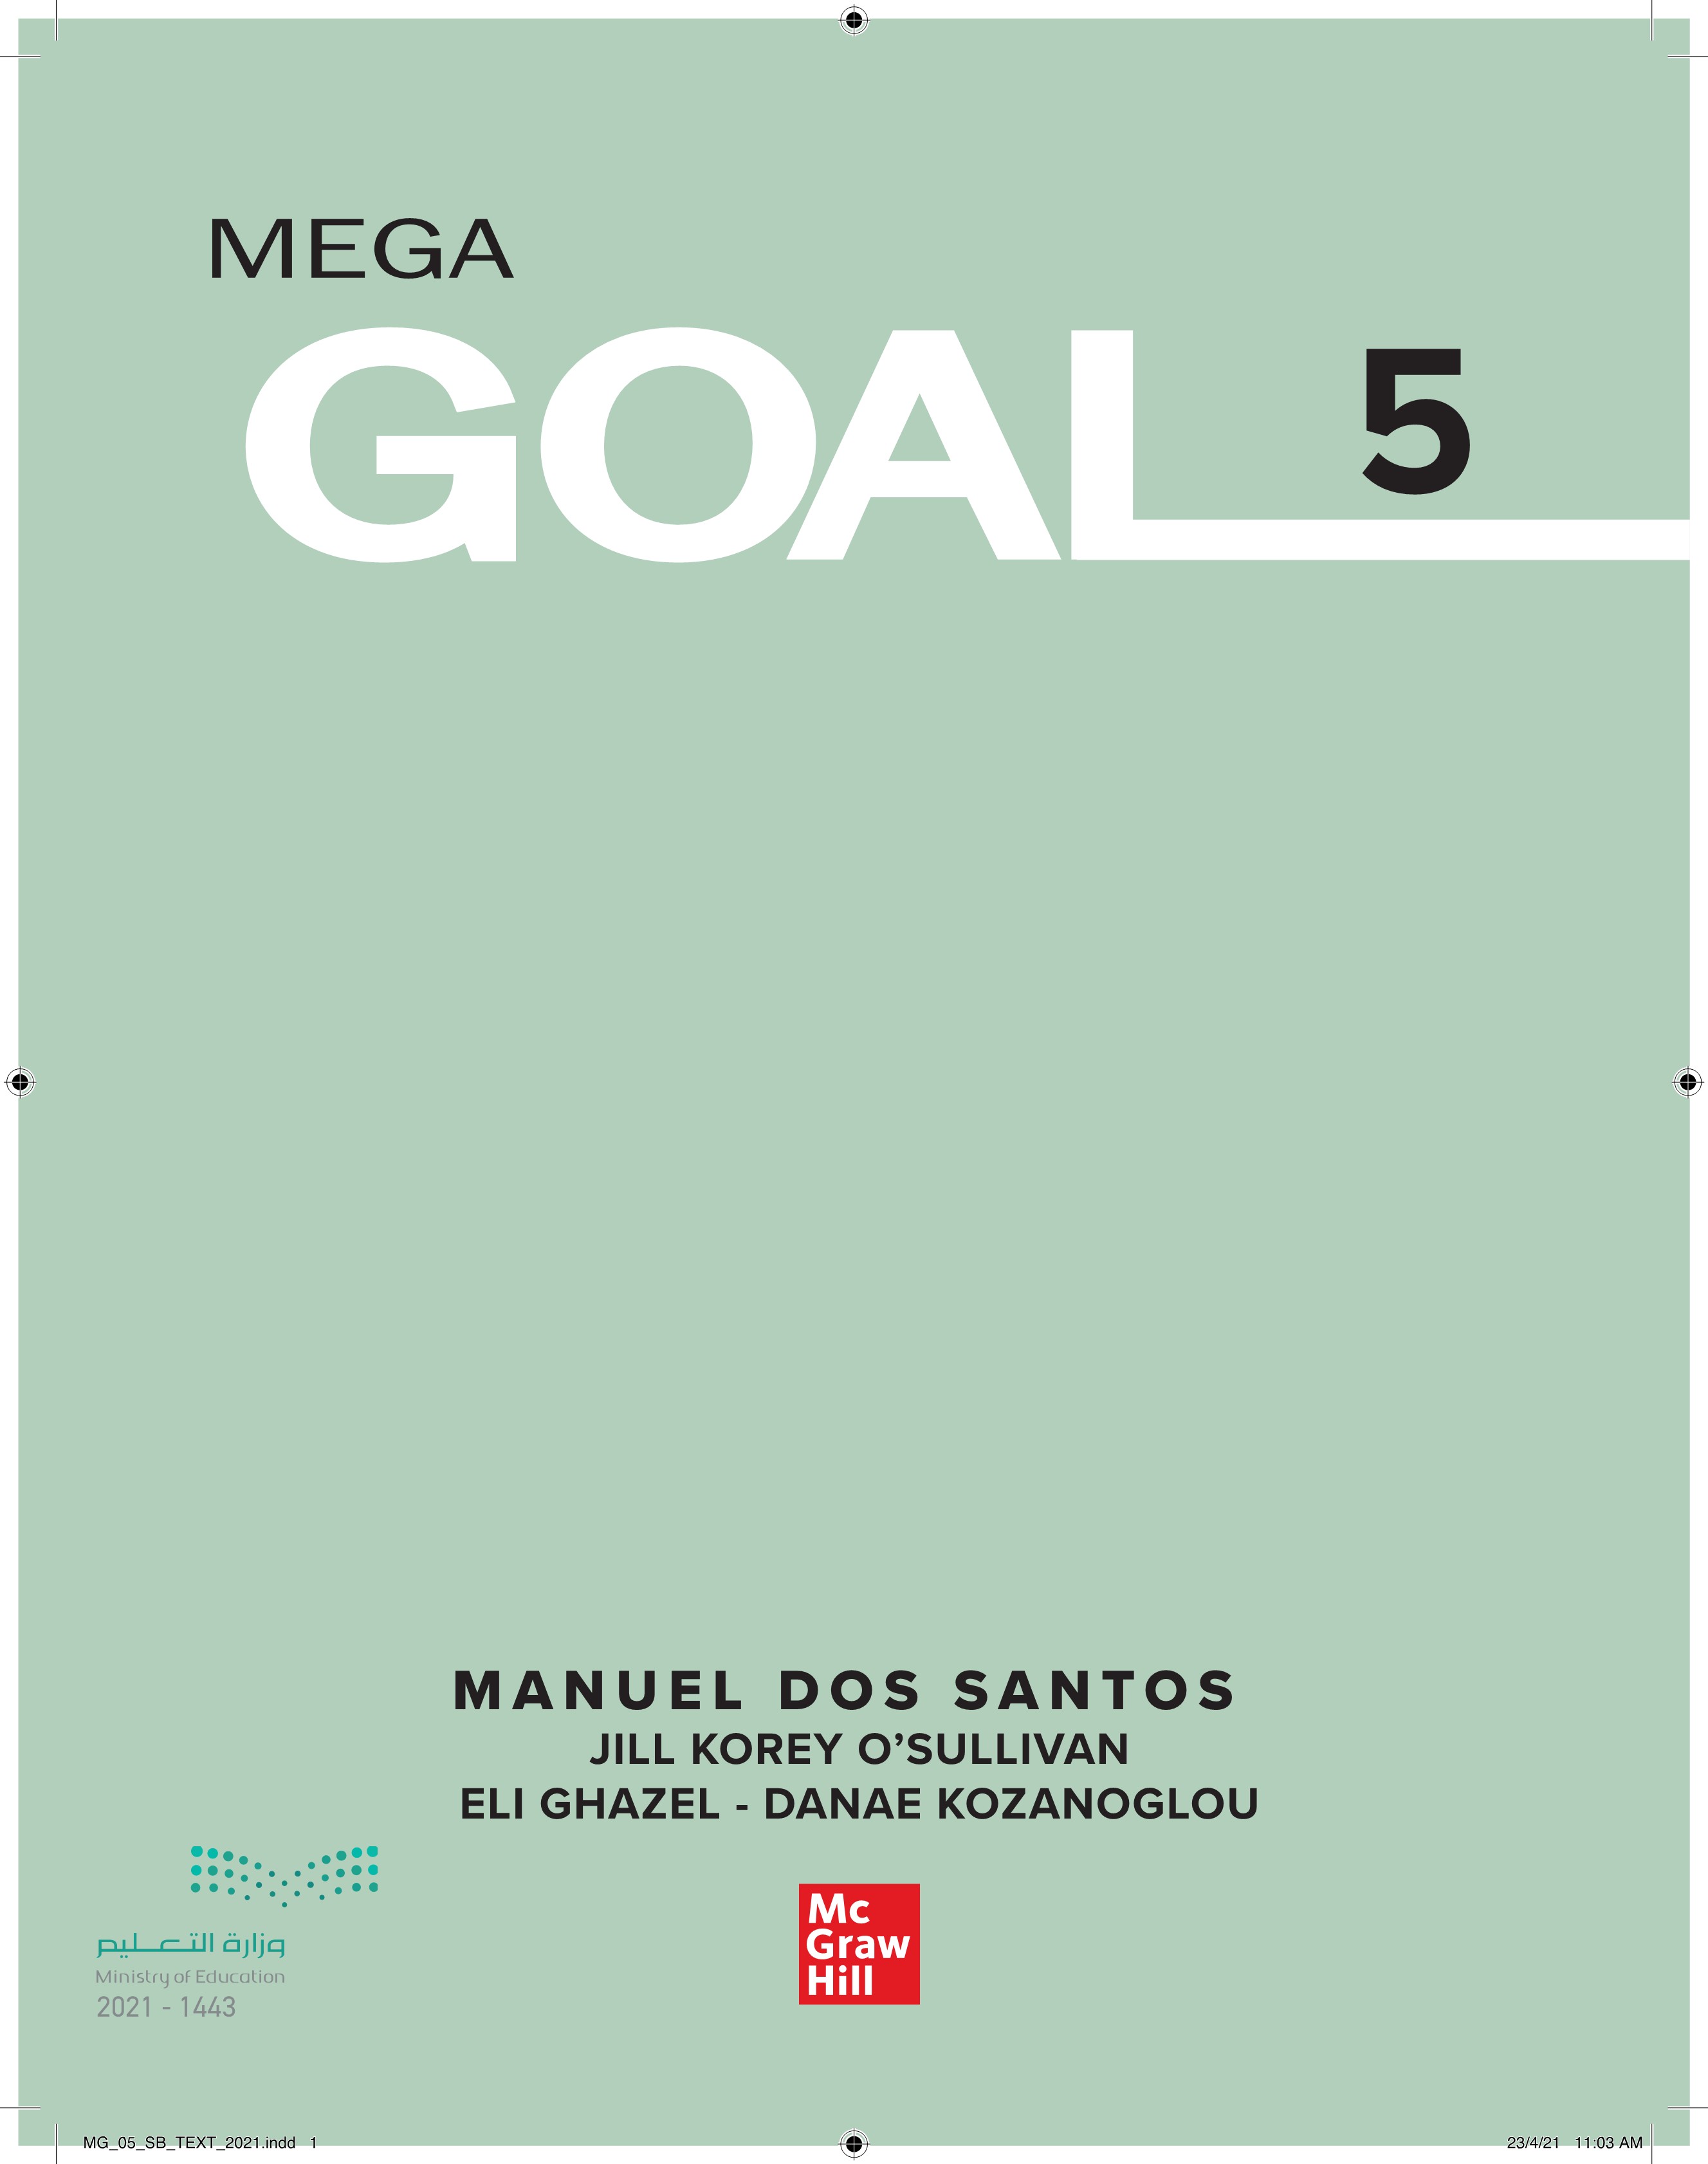 Mega-goal